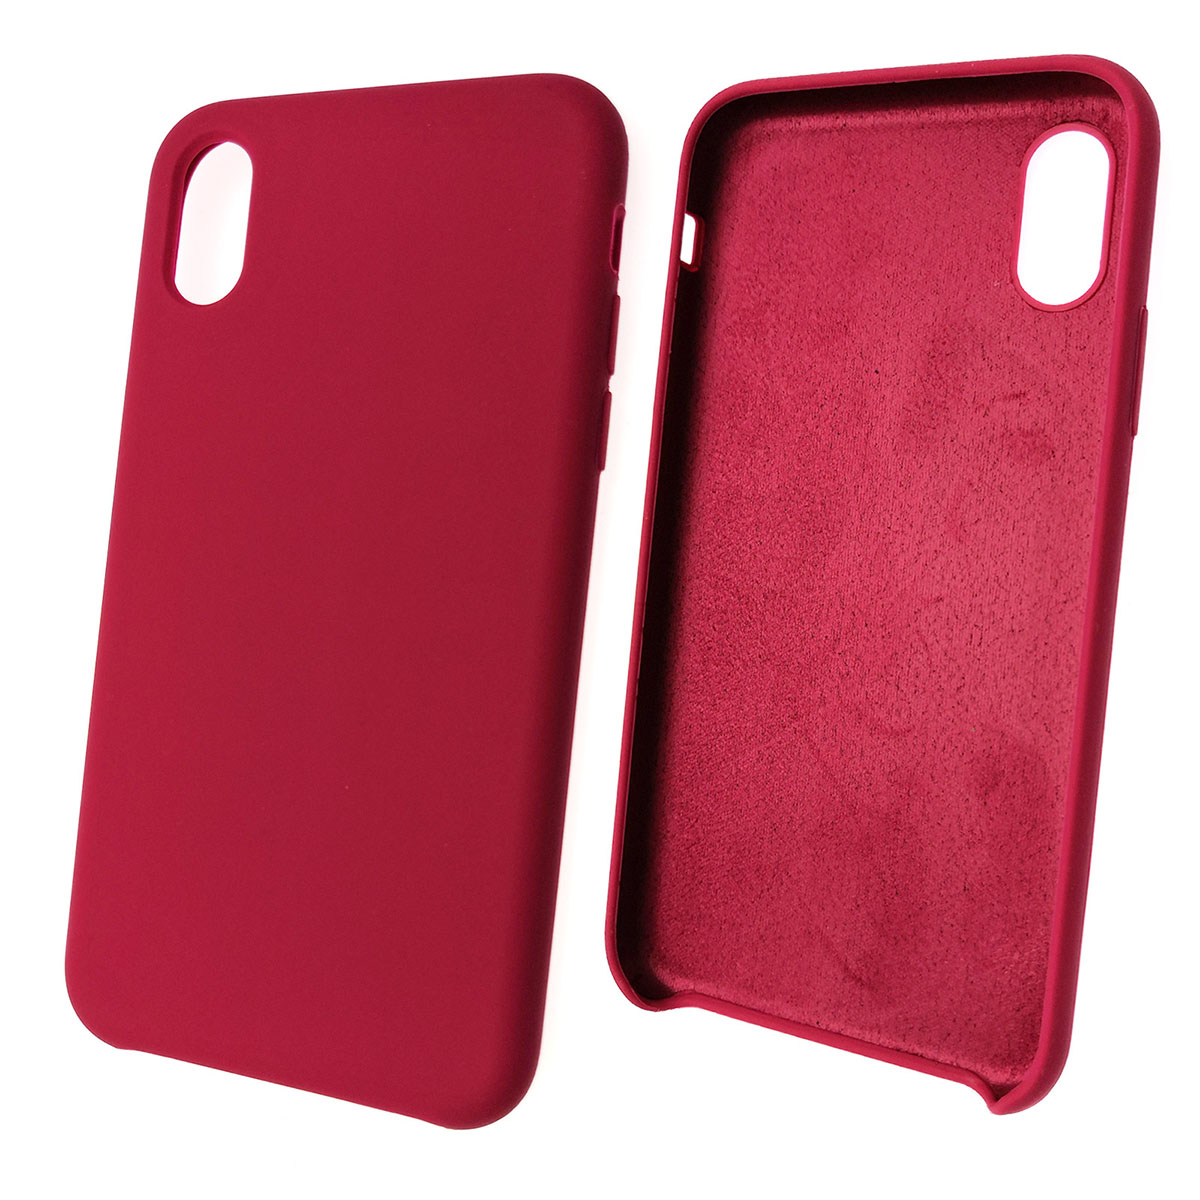 Чехол накладка Silicon Case для APPLE iPhone X, iPhone XS, силикон, бархат, цвет красная роза.